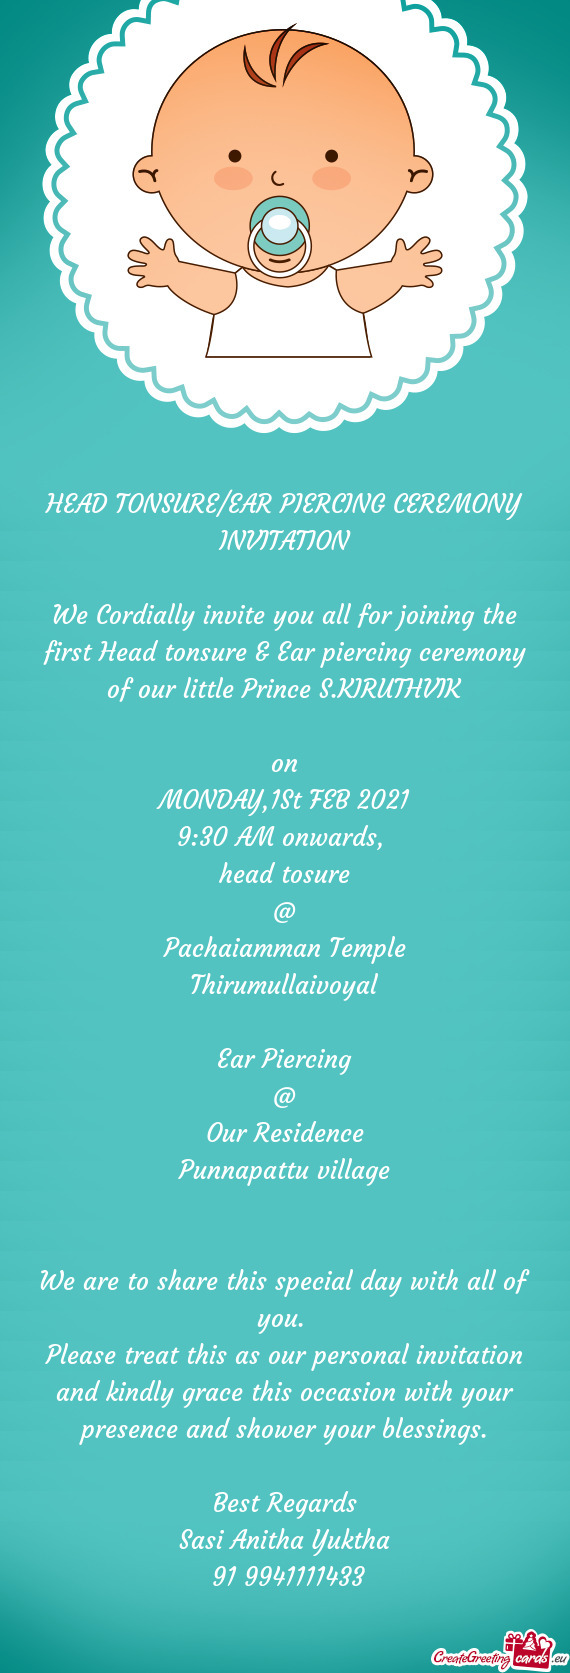 HEAD TONSURE/EAR PIERCING CEREMONY INVITATION